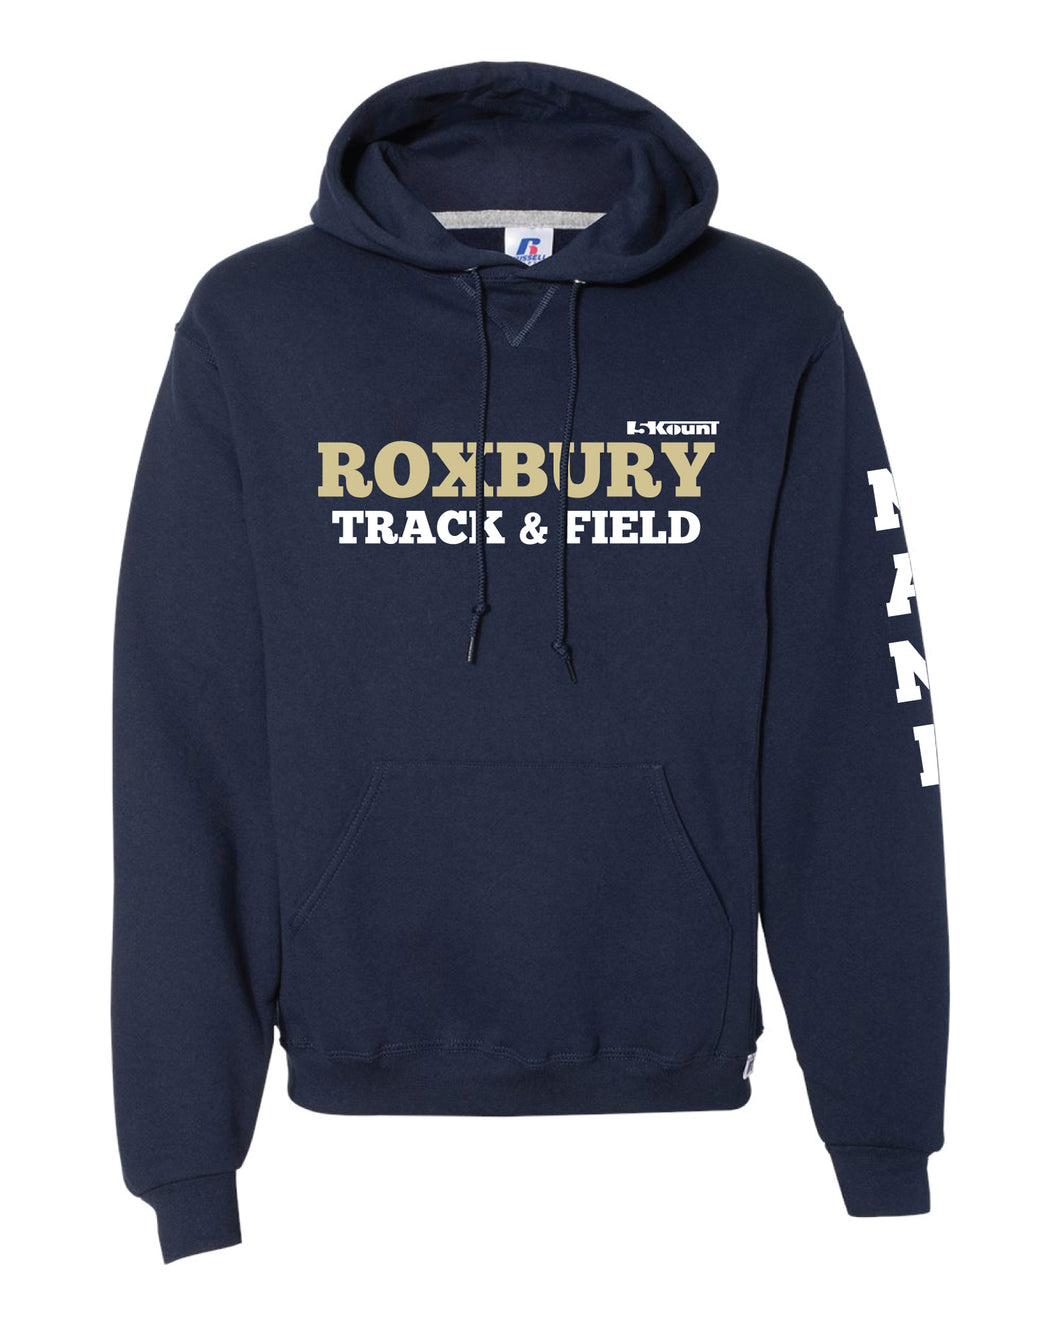 Roxbury Track & Field Russell Athletic Cotton Hoodie - Navy - 5KounT2018